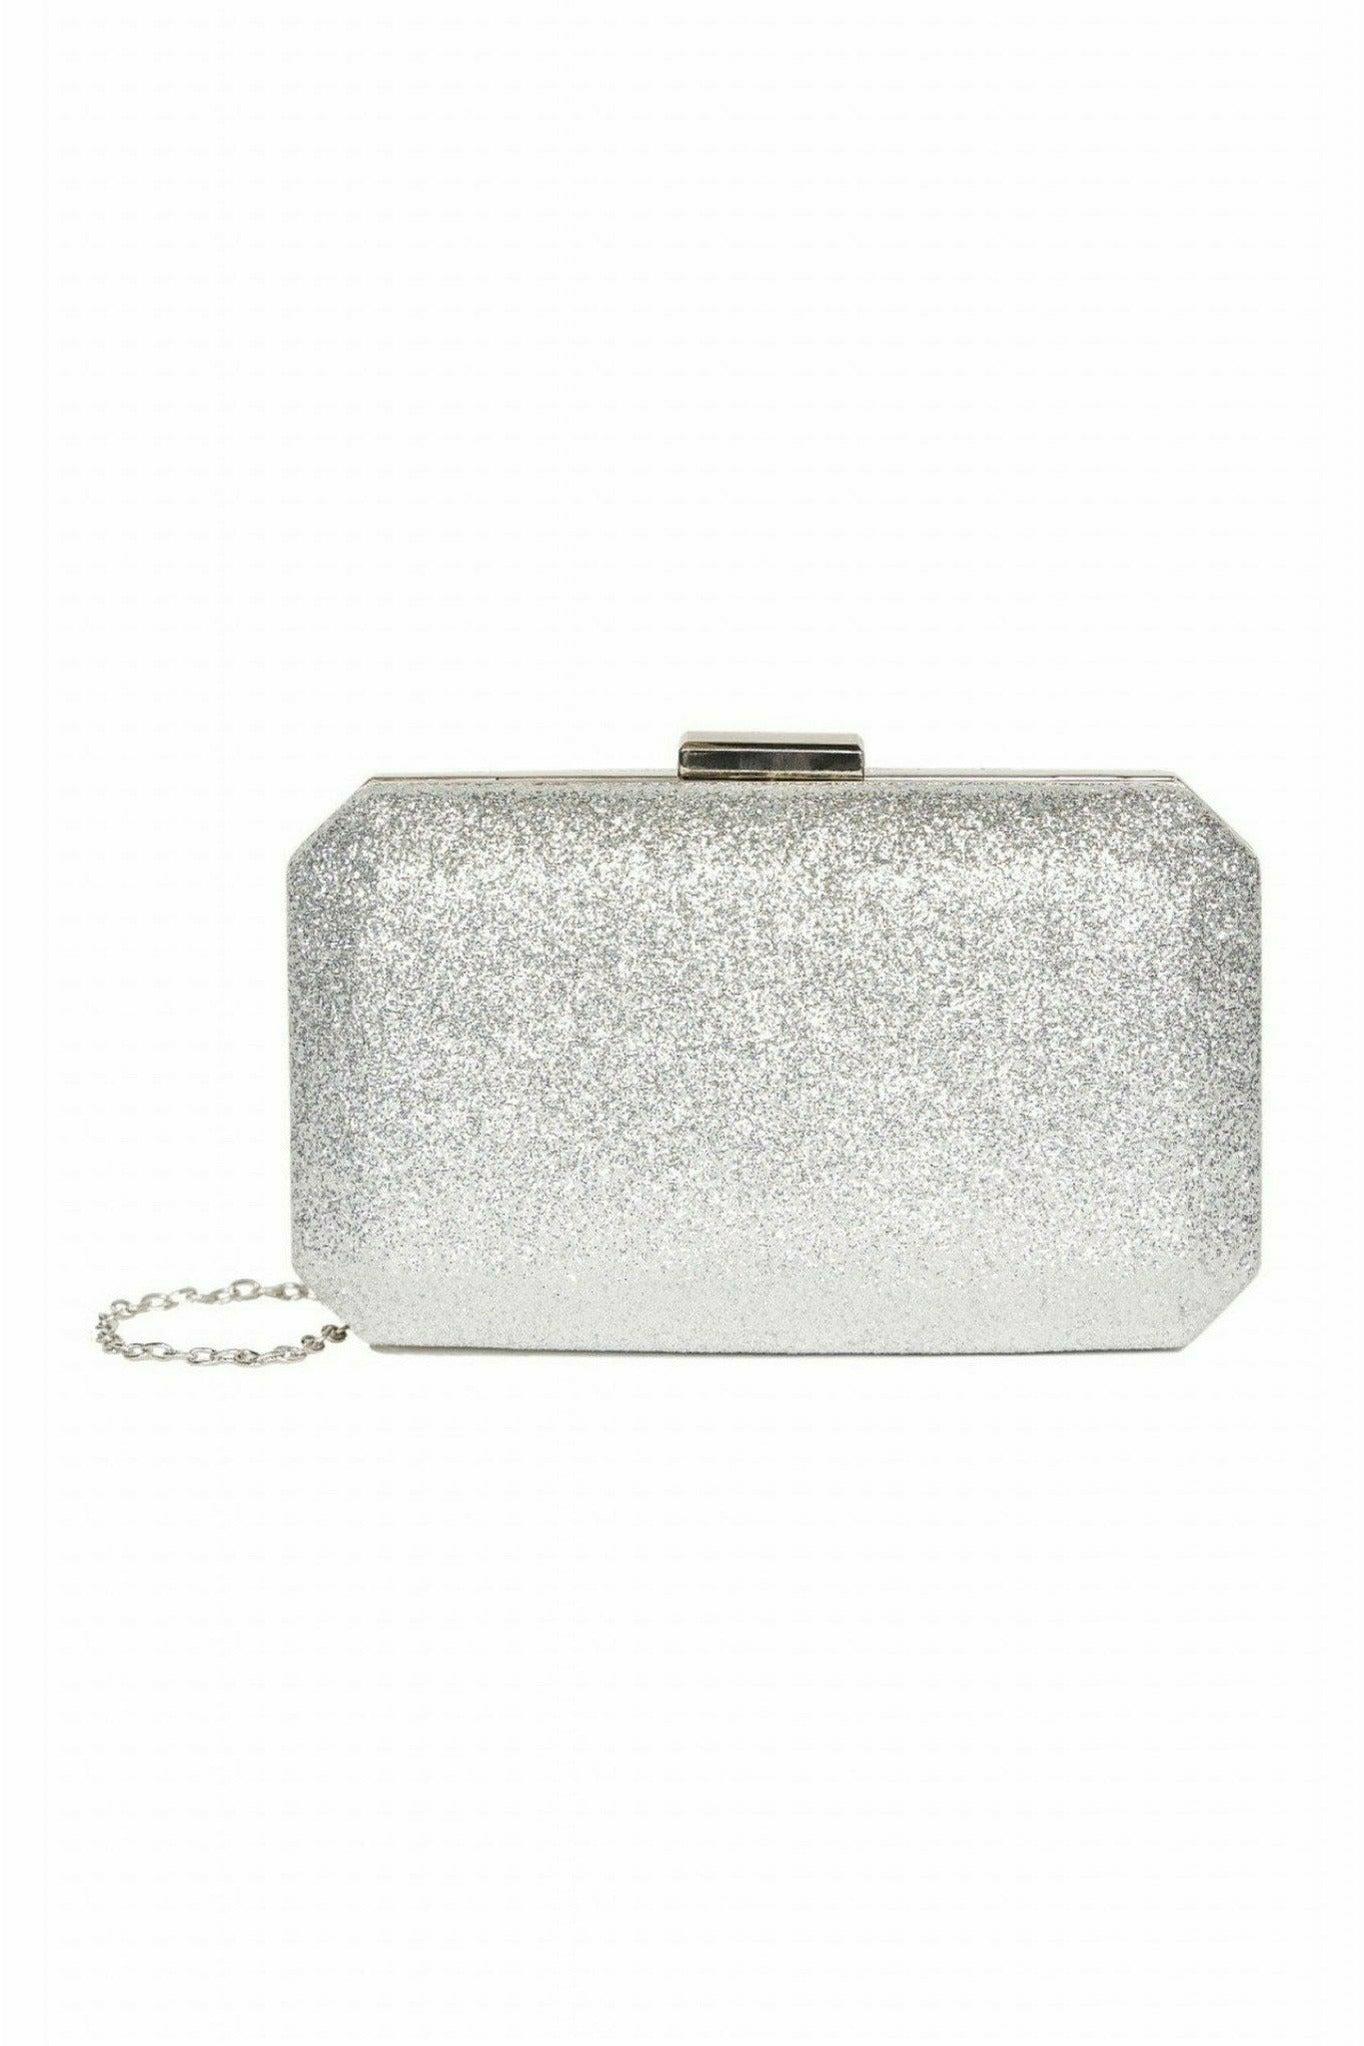 Womens Bags Clutches and evening bags Paradox London Dulcie Glitter Box Clutch Bag in Silver Metallic 